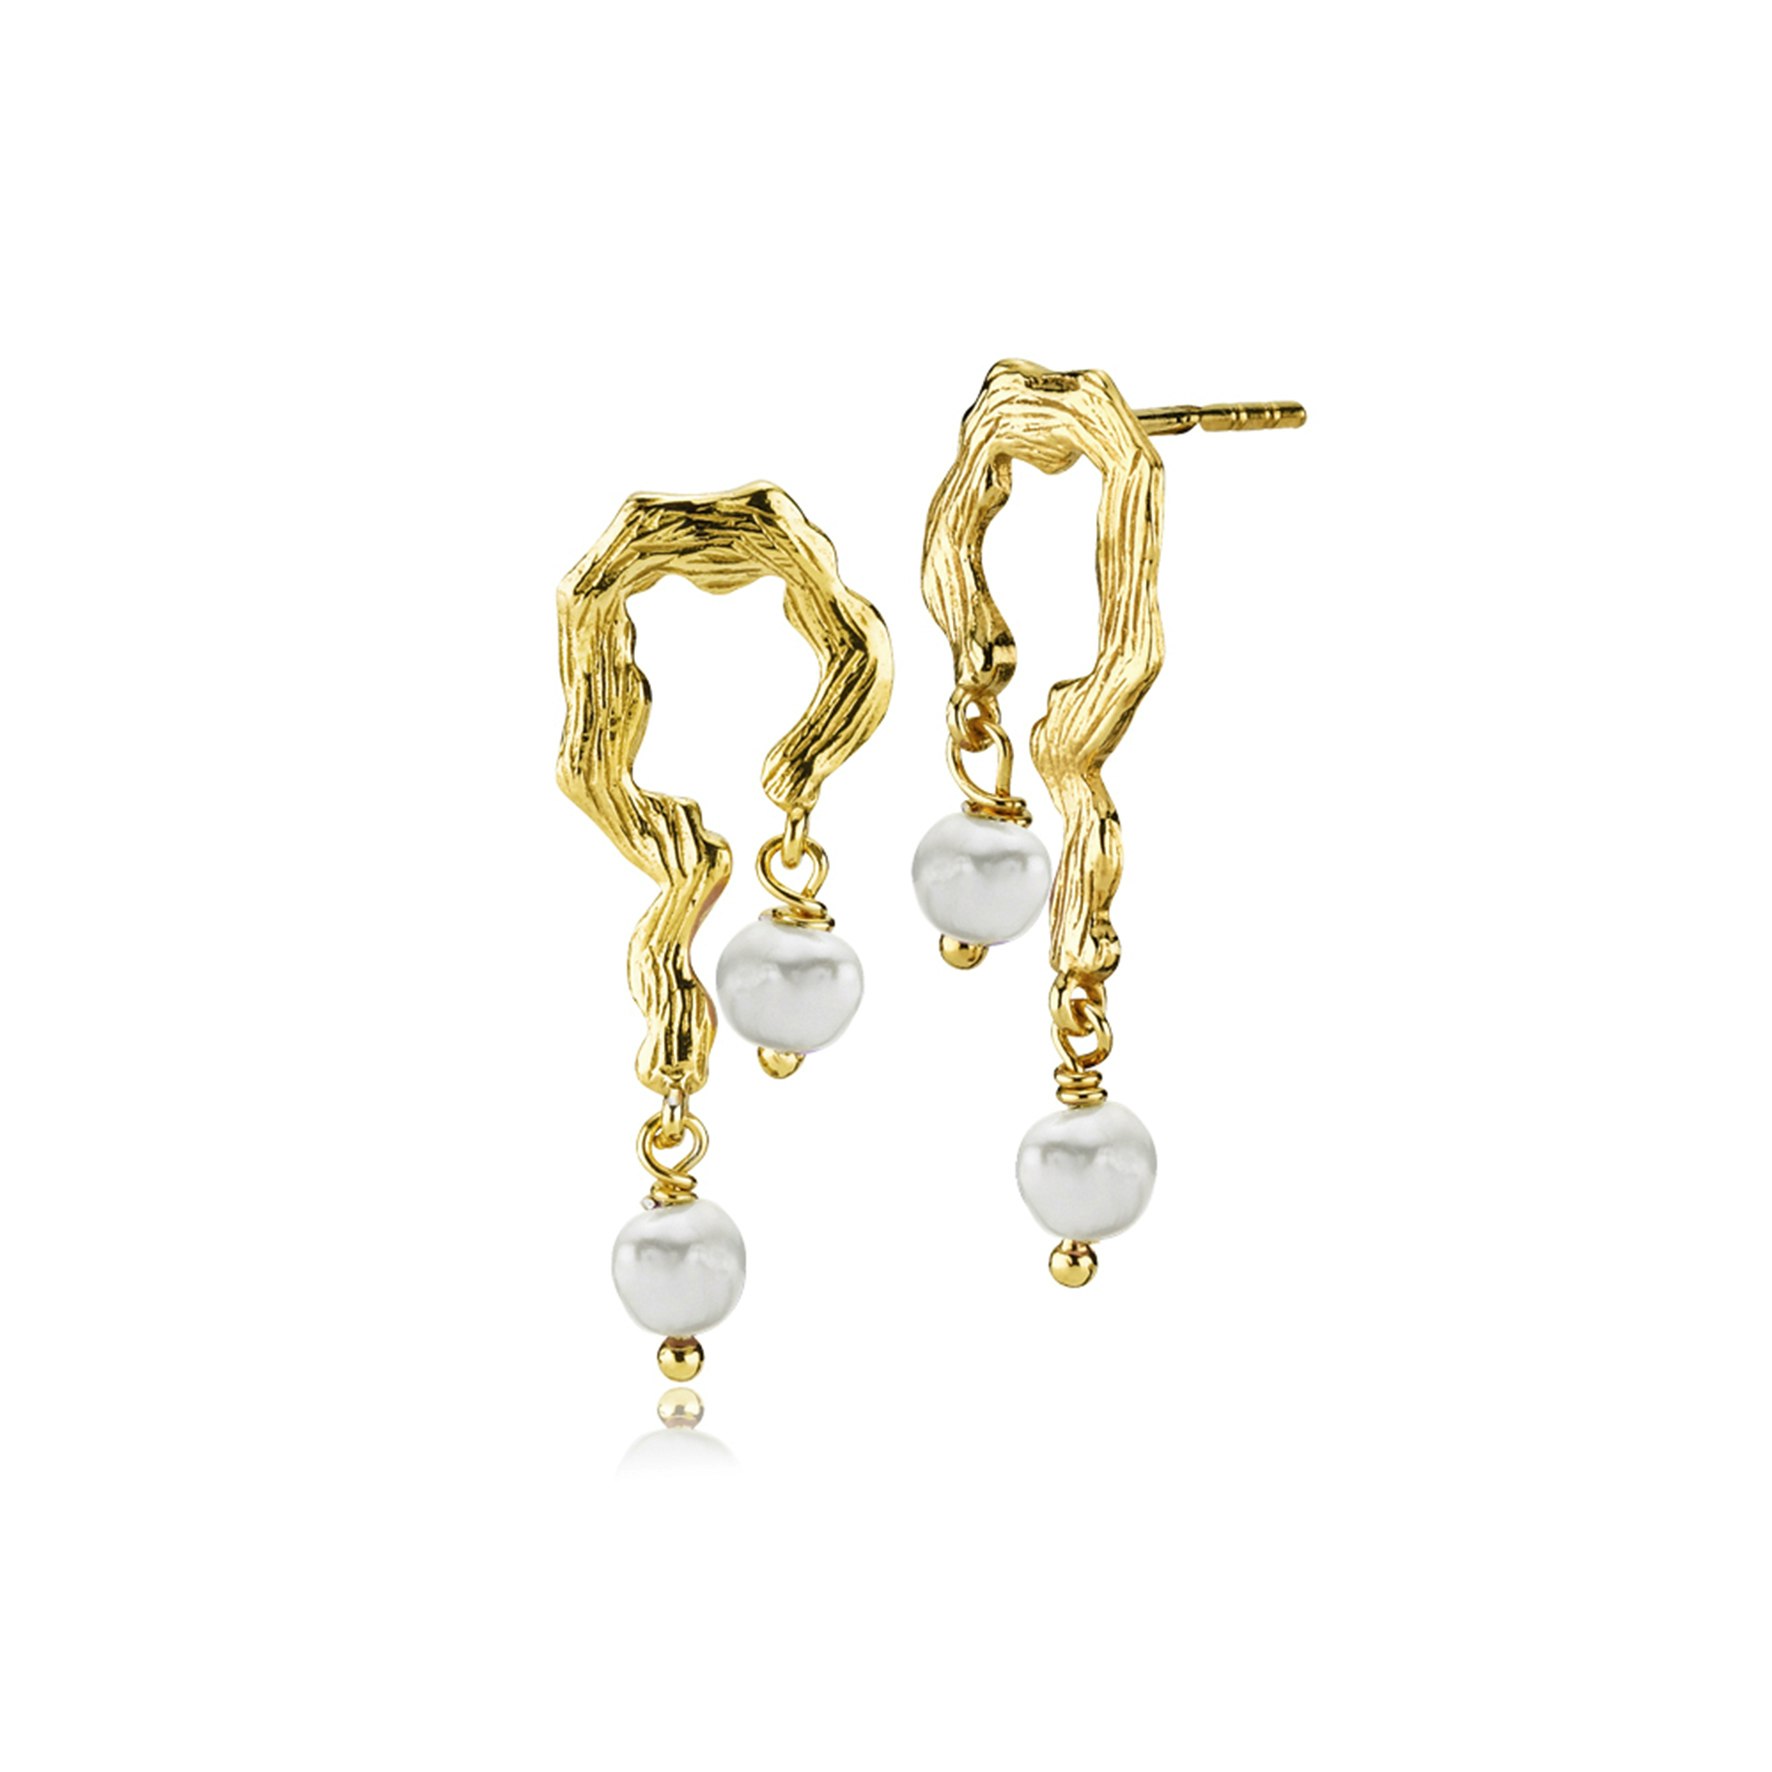 Lærke Bentsen By Sistie Earrings With Pearls från Sistie i Förgyllt-Silver Sterling 925